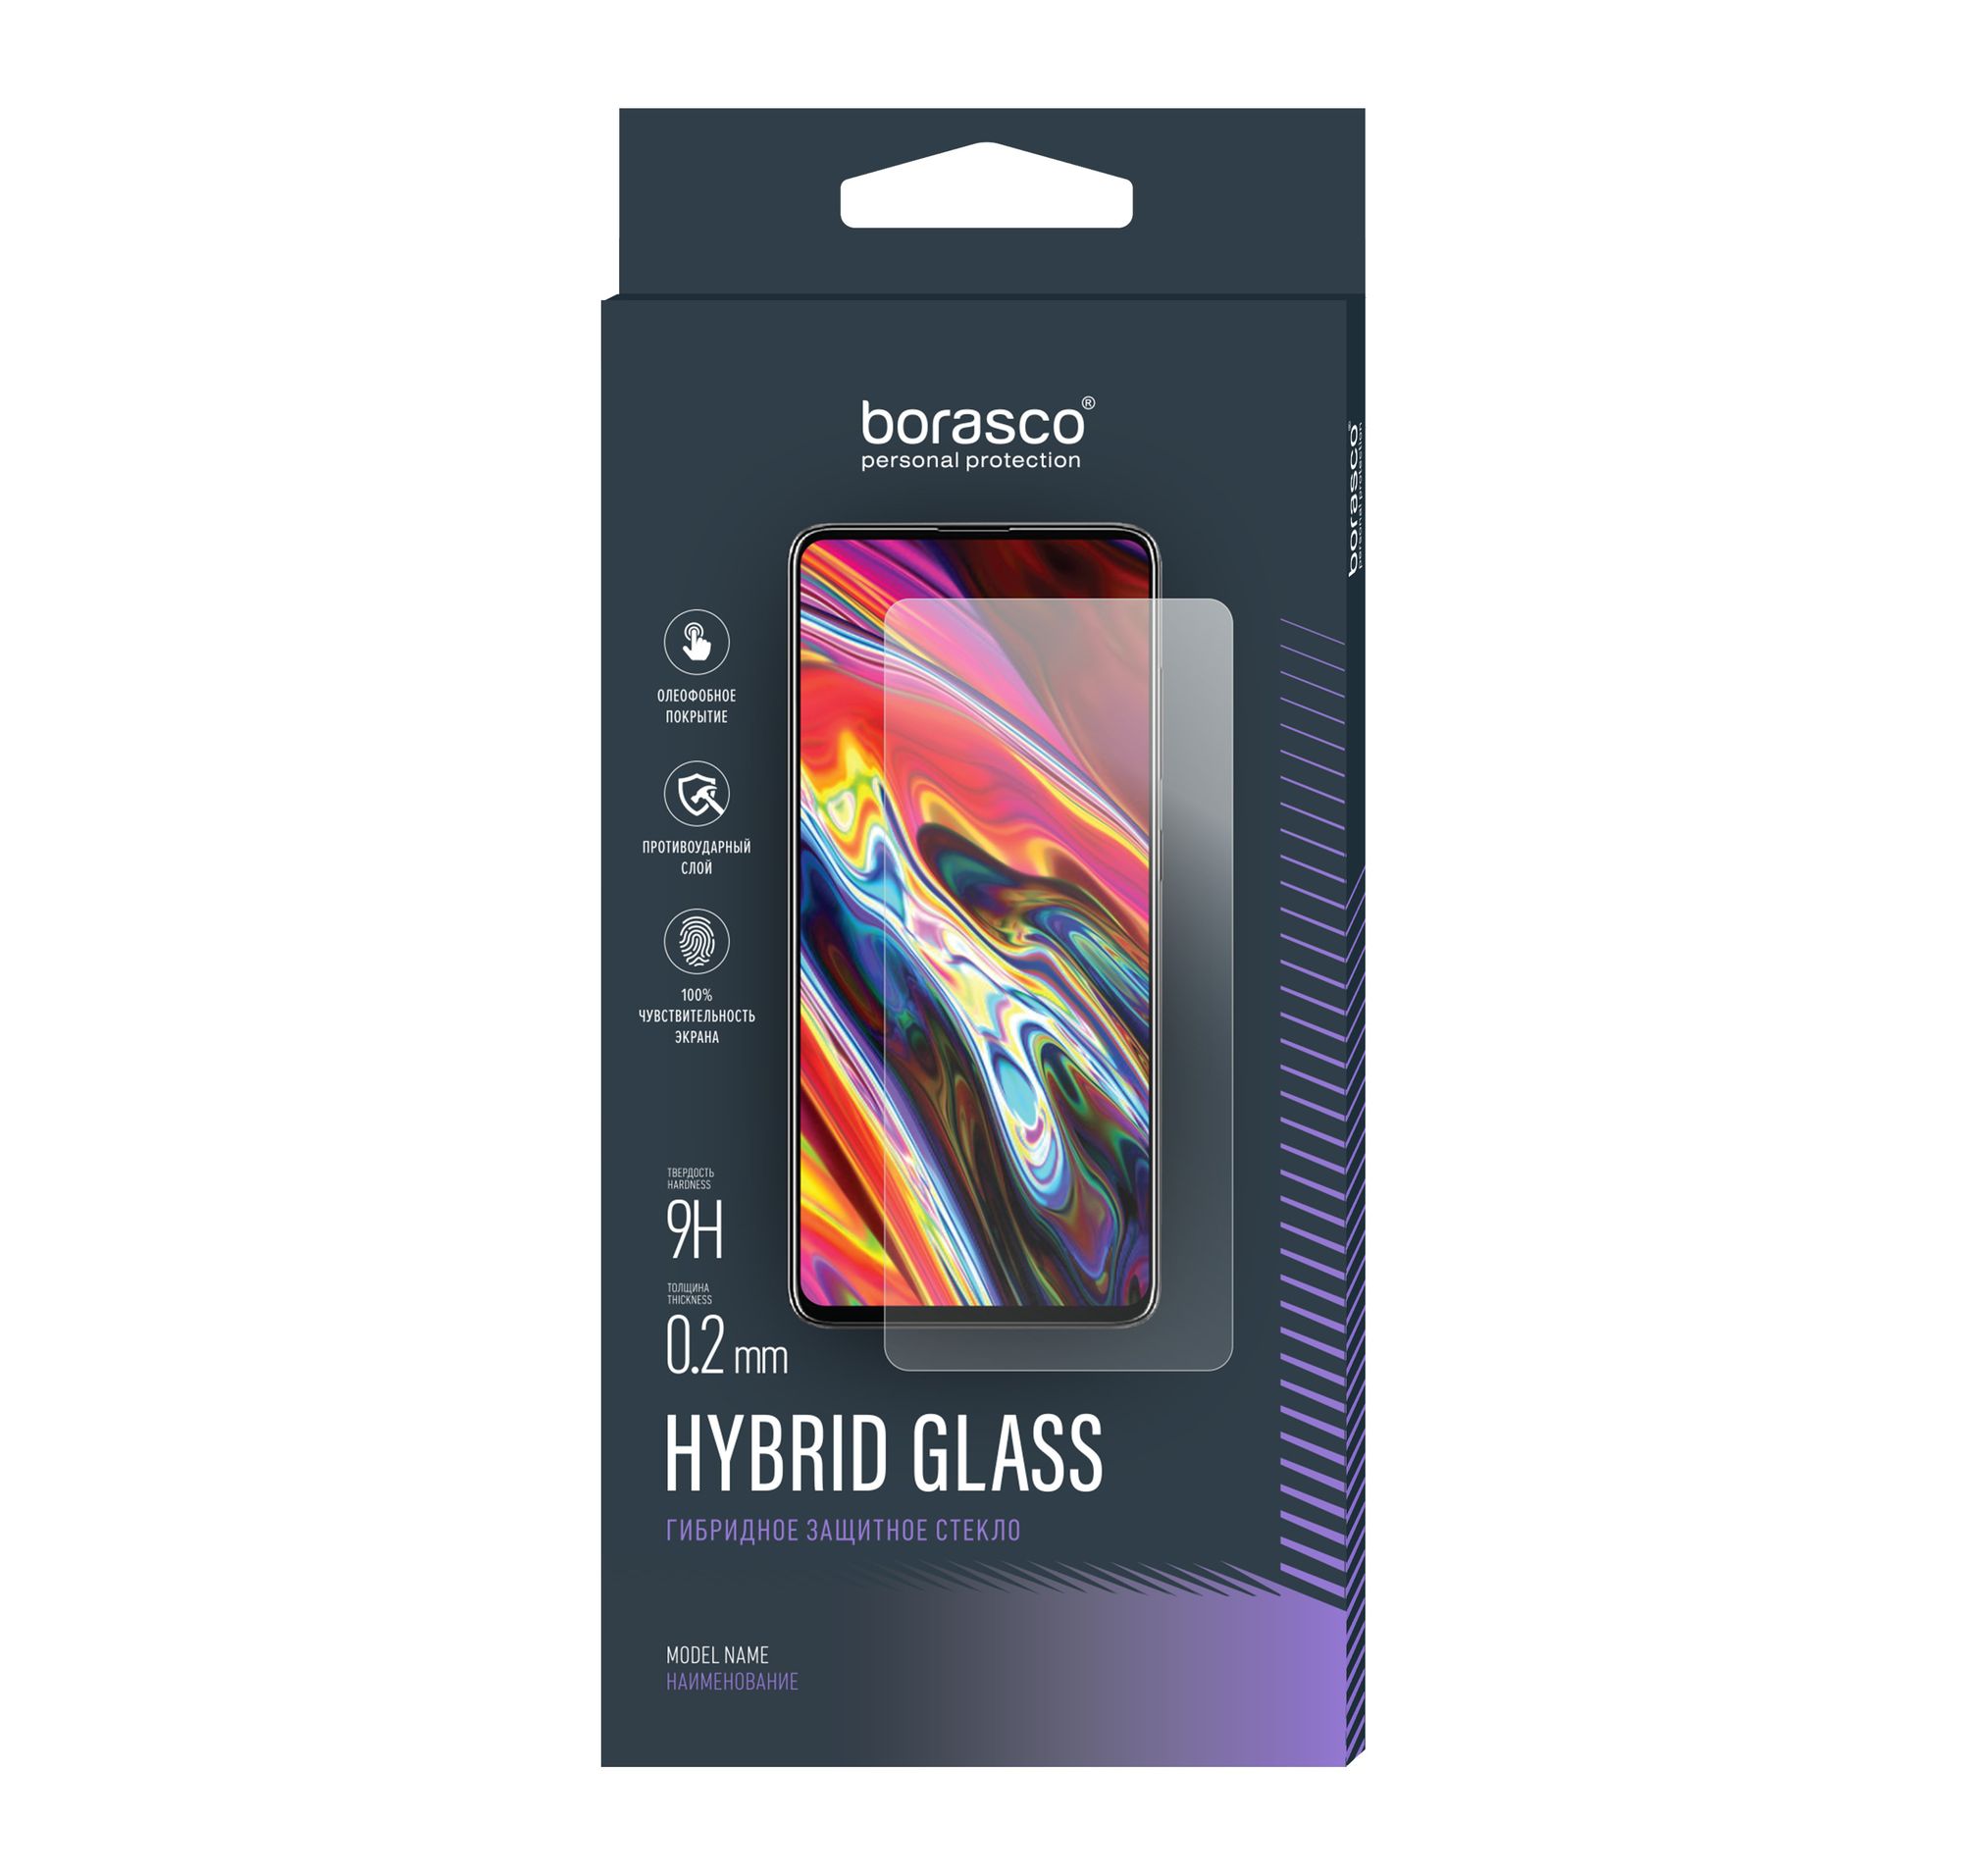 Стекло защитное Hybrid Glass VSP 0,26 мм для Sony Xperia XZ защитное стекло vsp flex для sony xperia xz1 compact g8441